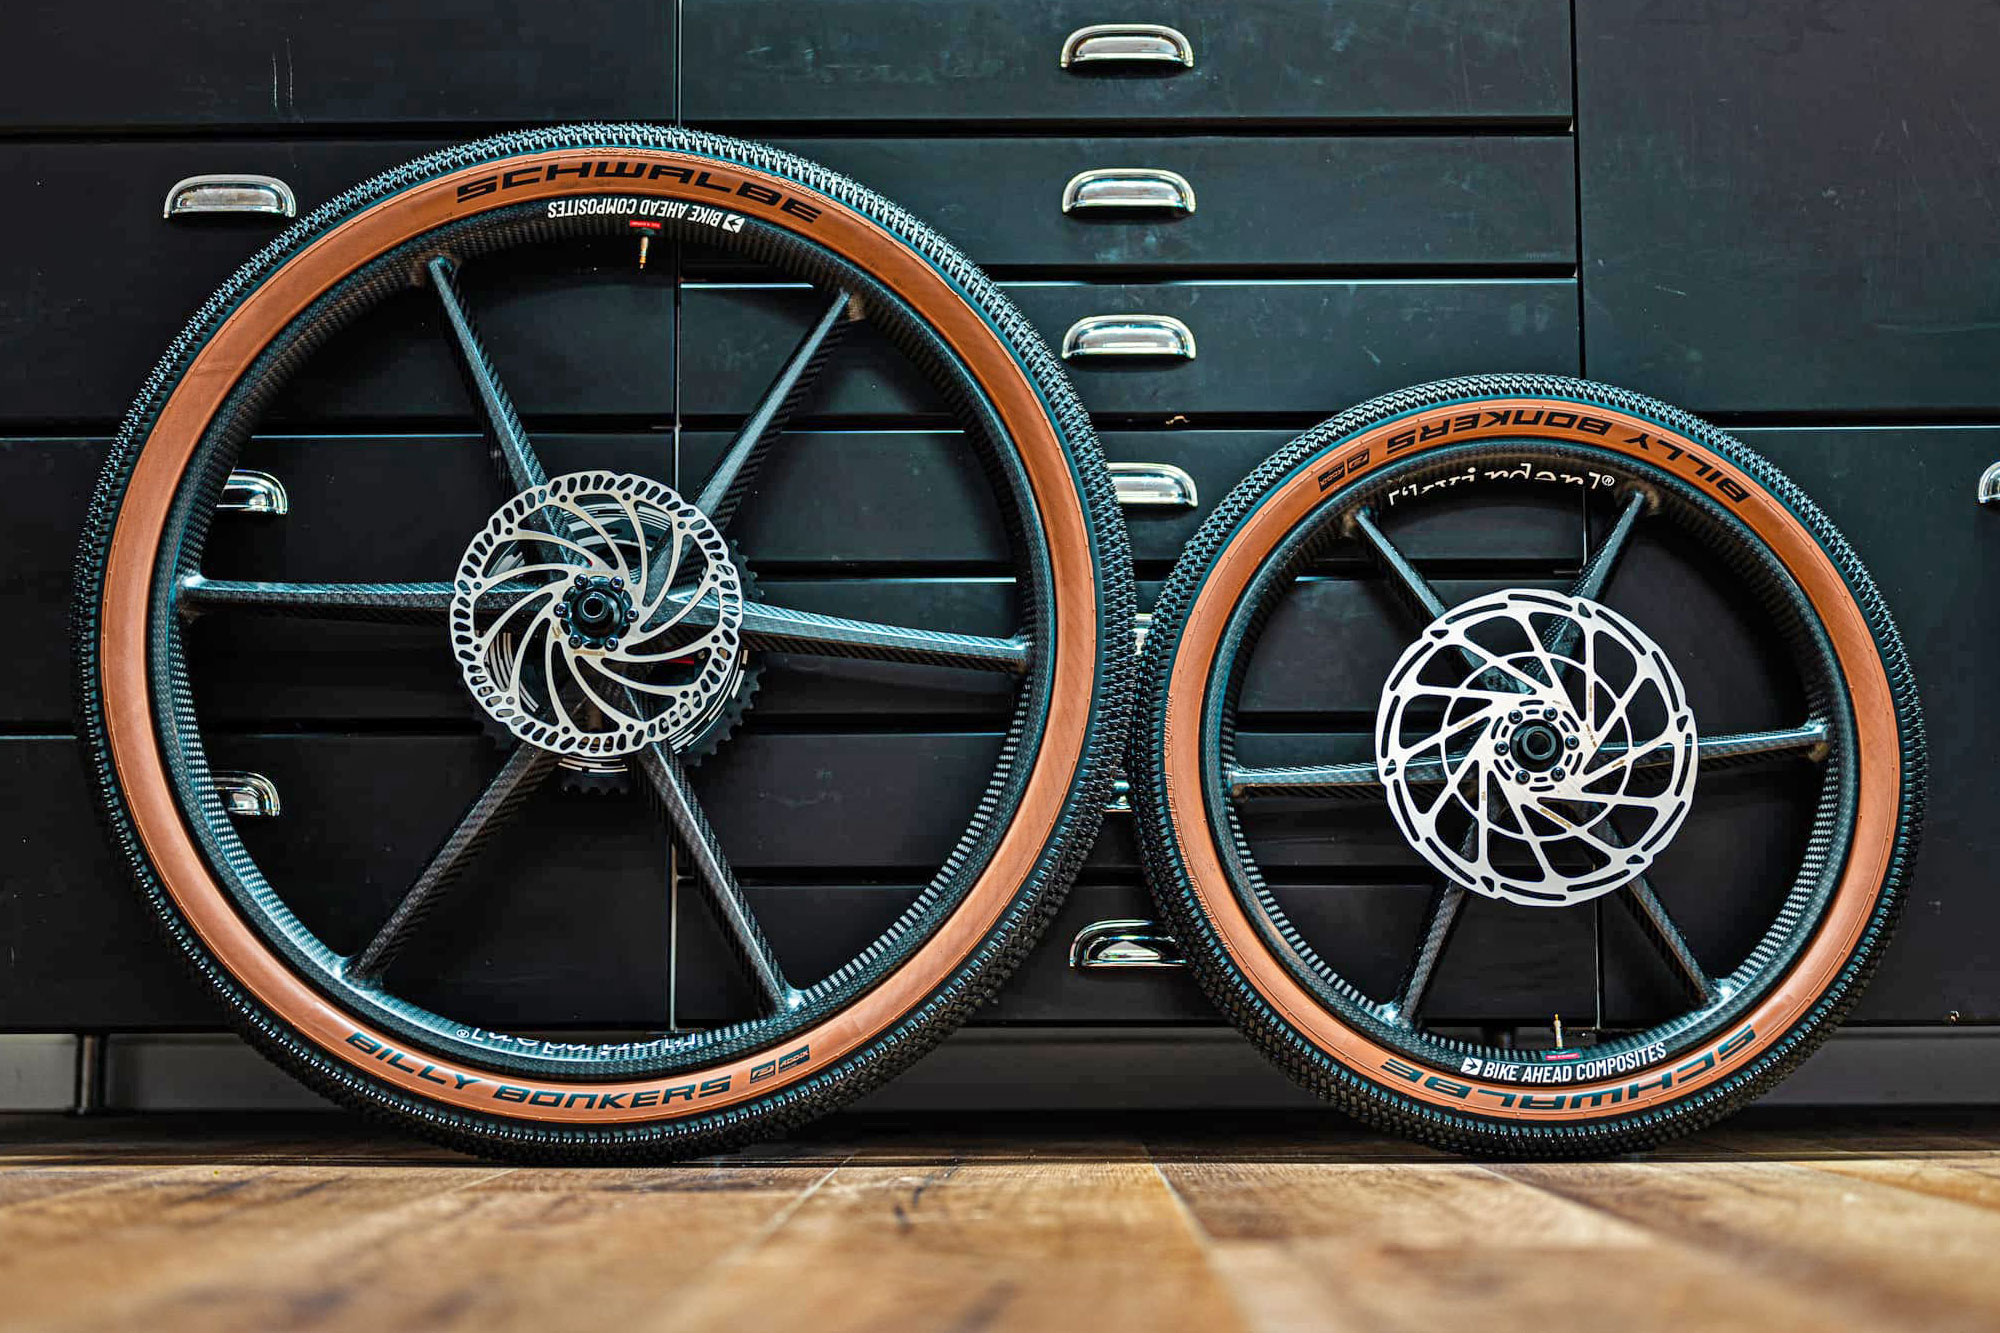 Bike Ahead Biturbo Cargo ultralight ultra-strong 6-spoke monocoque carbon wheels for cargo ebikes, 20" & 26" combo by Kvirder